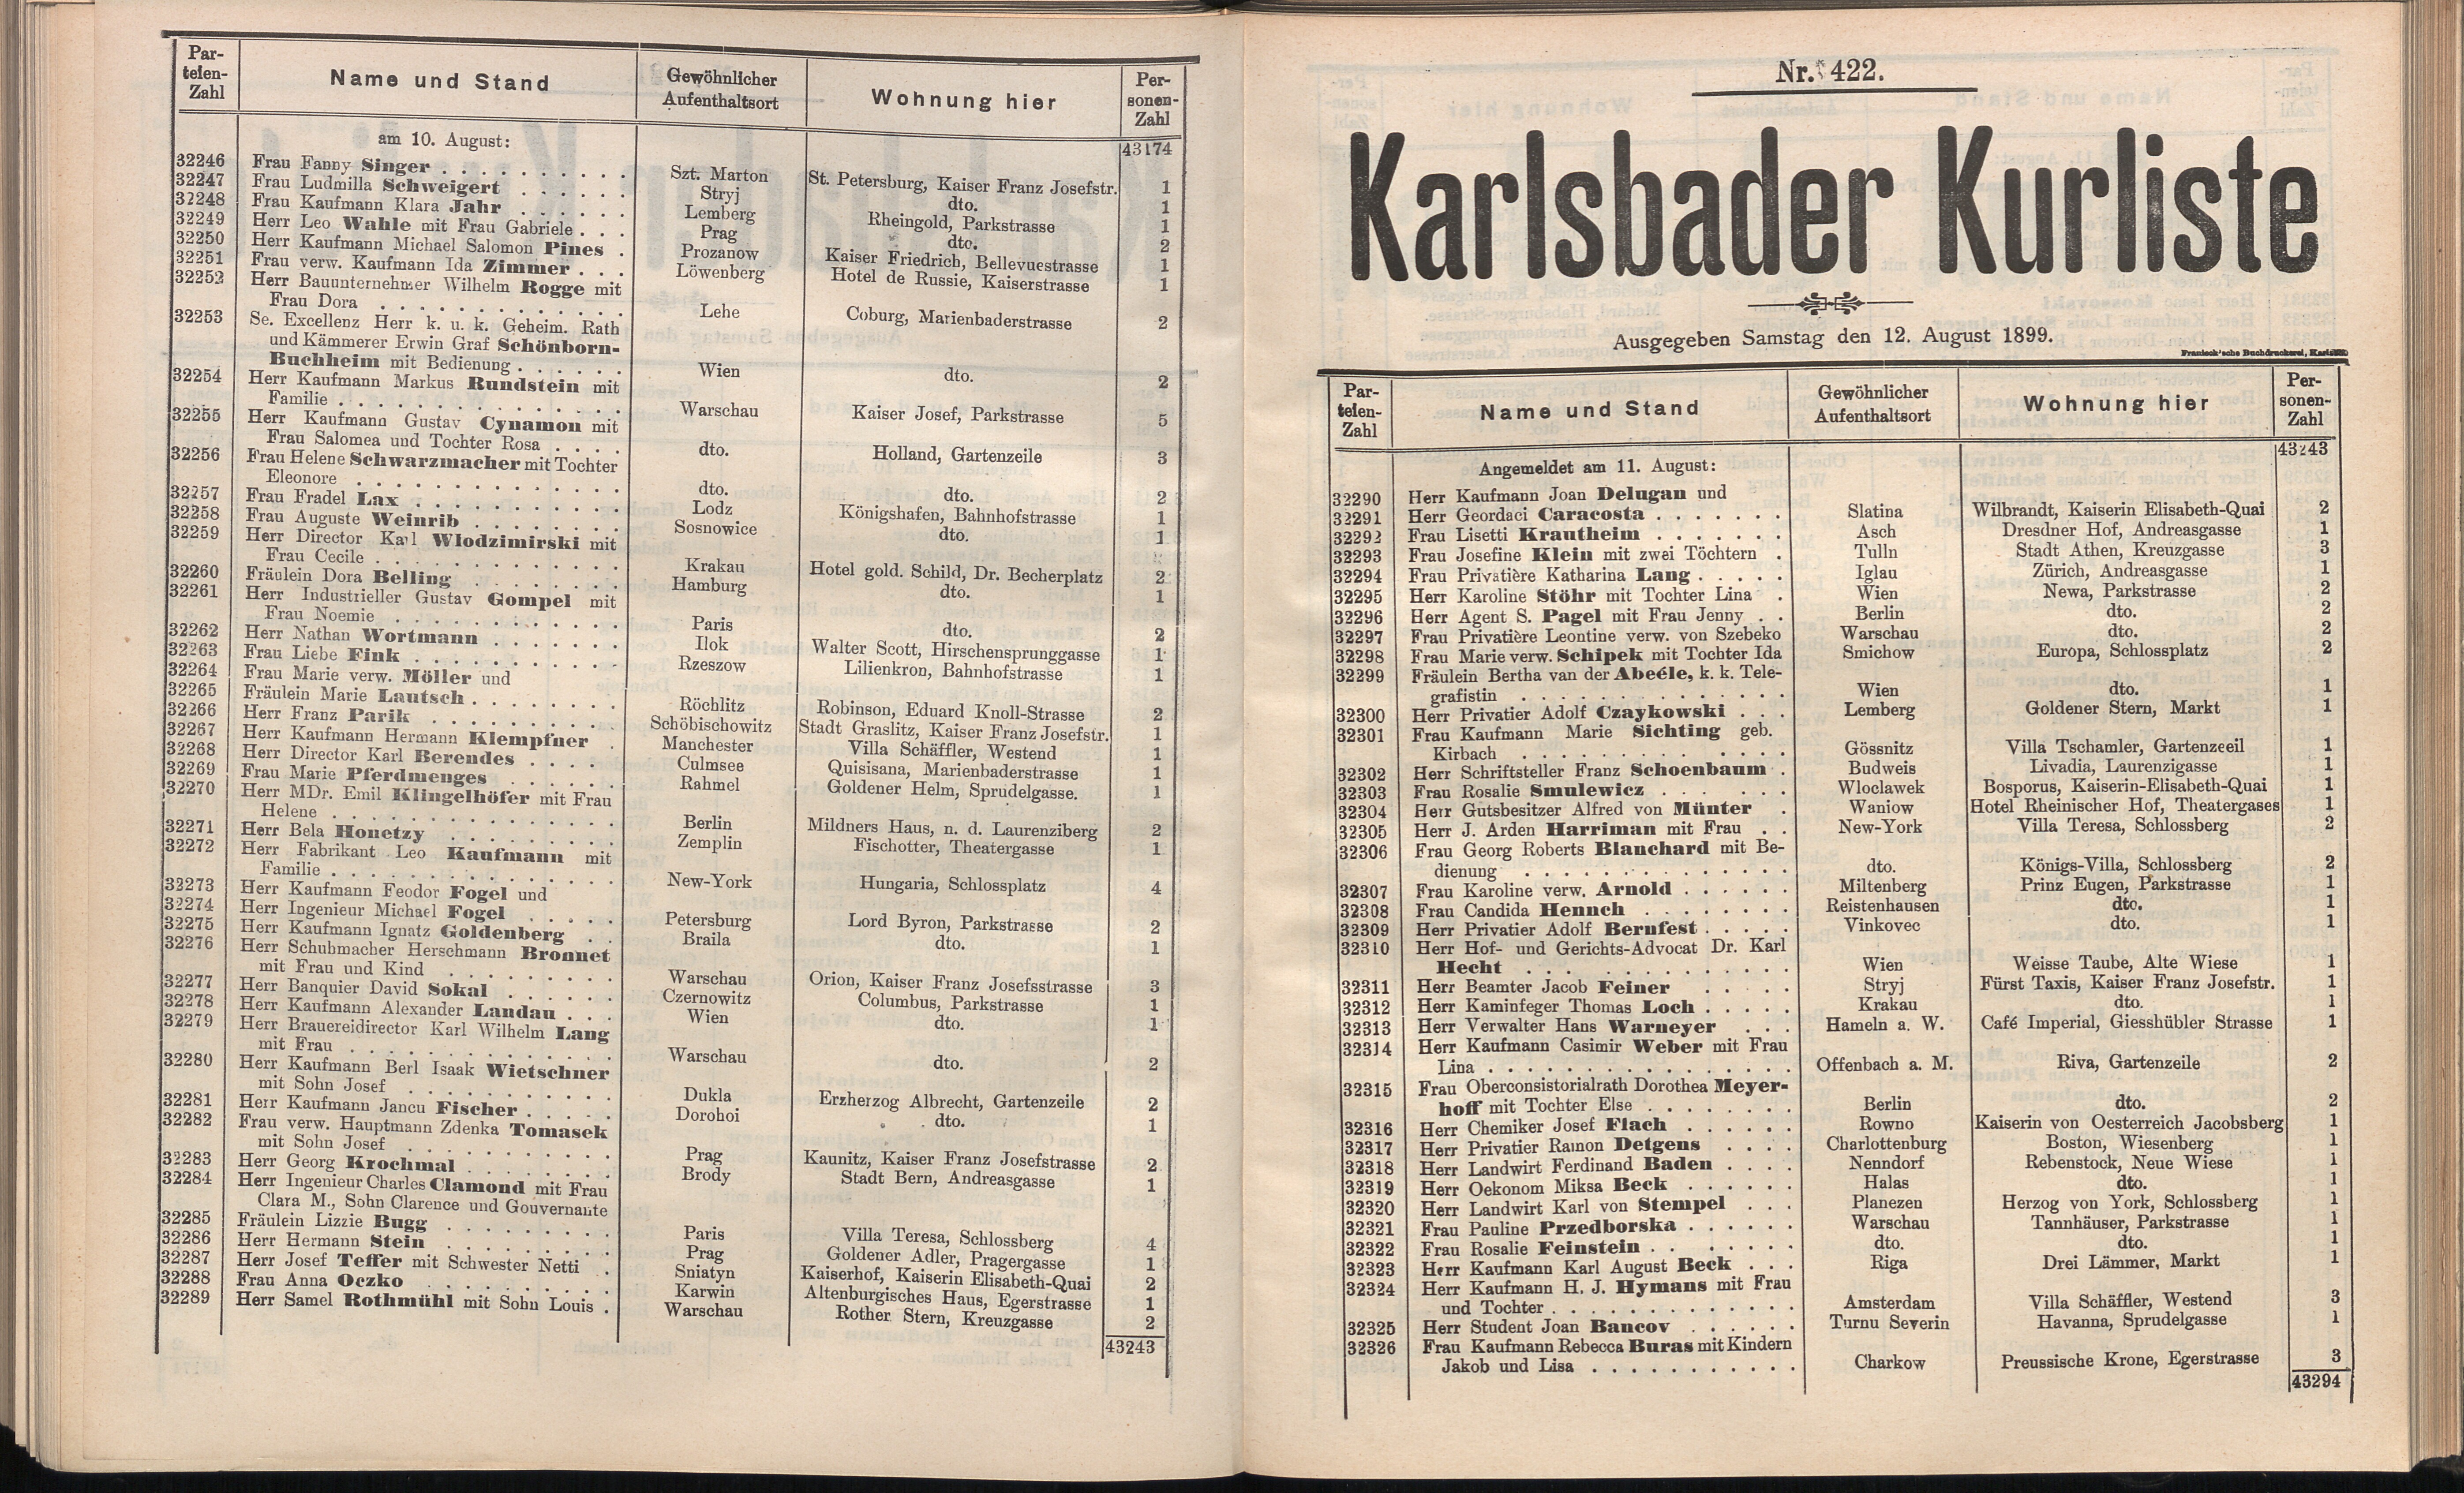 440. soap-kv_knihovna_karlsbader-kurliste-1899_4410